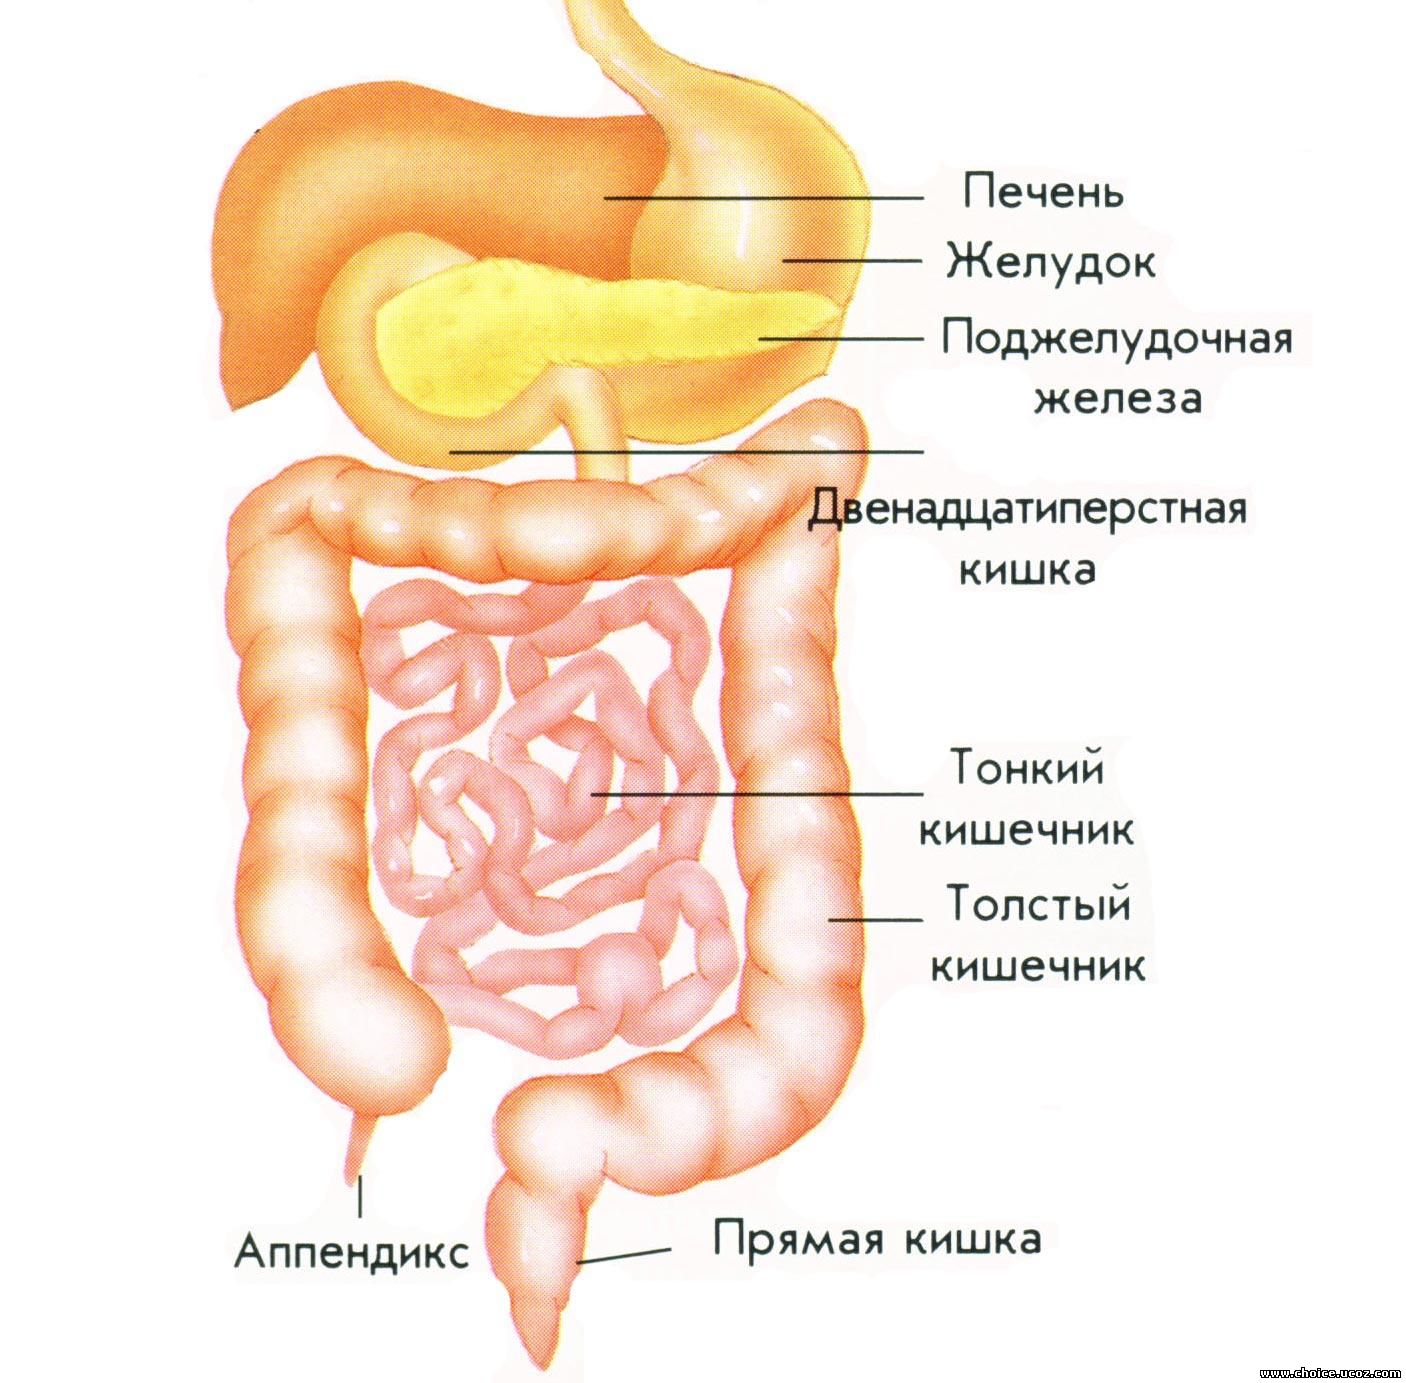 Тонкий желудок строение. Желудочно-кишечный тракт человека строение. Строение желудочно-кишечного тракта человека схема. Строение желудка и кишечника. Поджелудочная железа и тонкий кишечник.